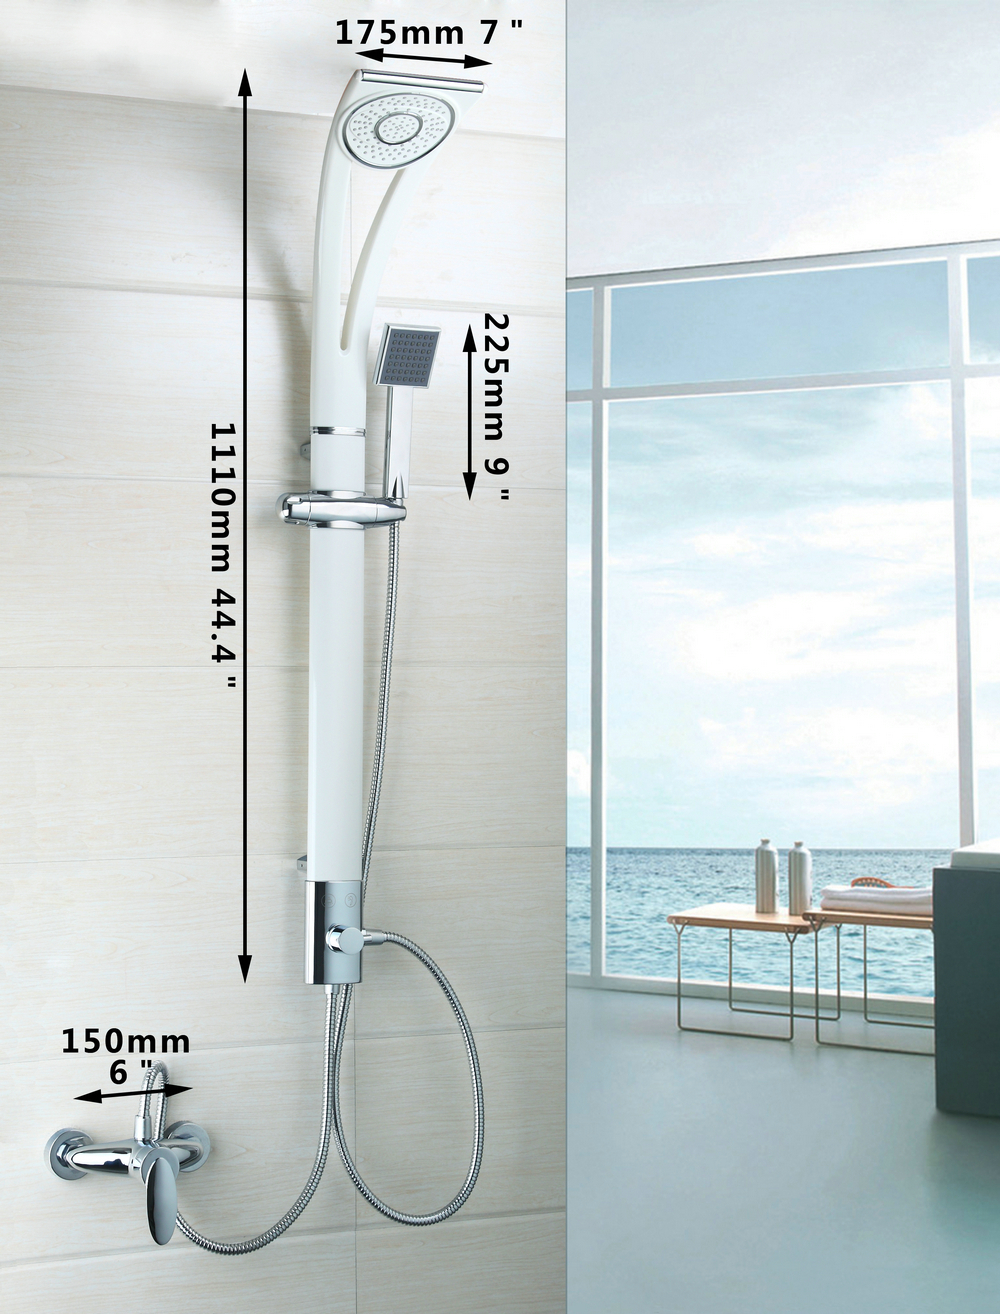 hello 50259/0 wall mount rain shower banho set mixer faucet bathroom adjustable shower head & handheld shower bathtub mixer tap